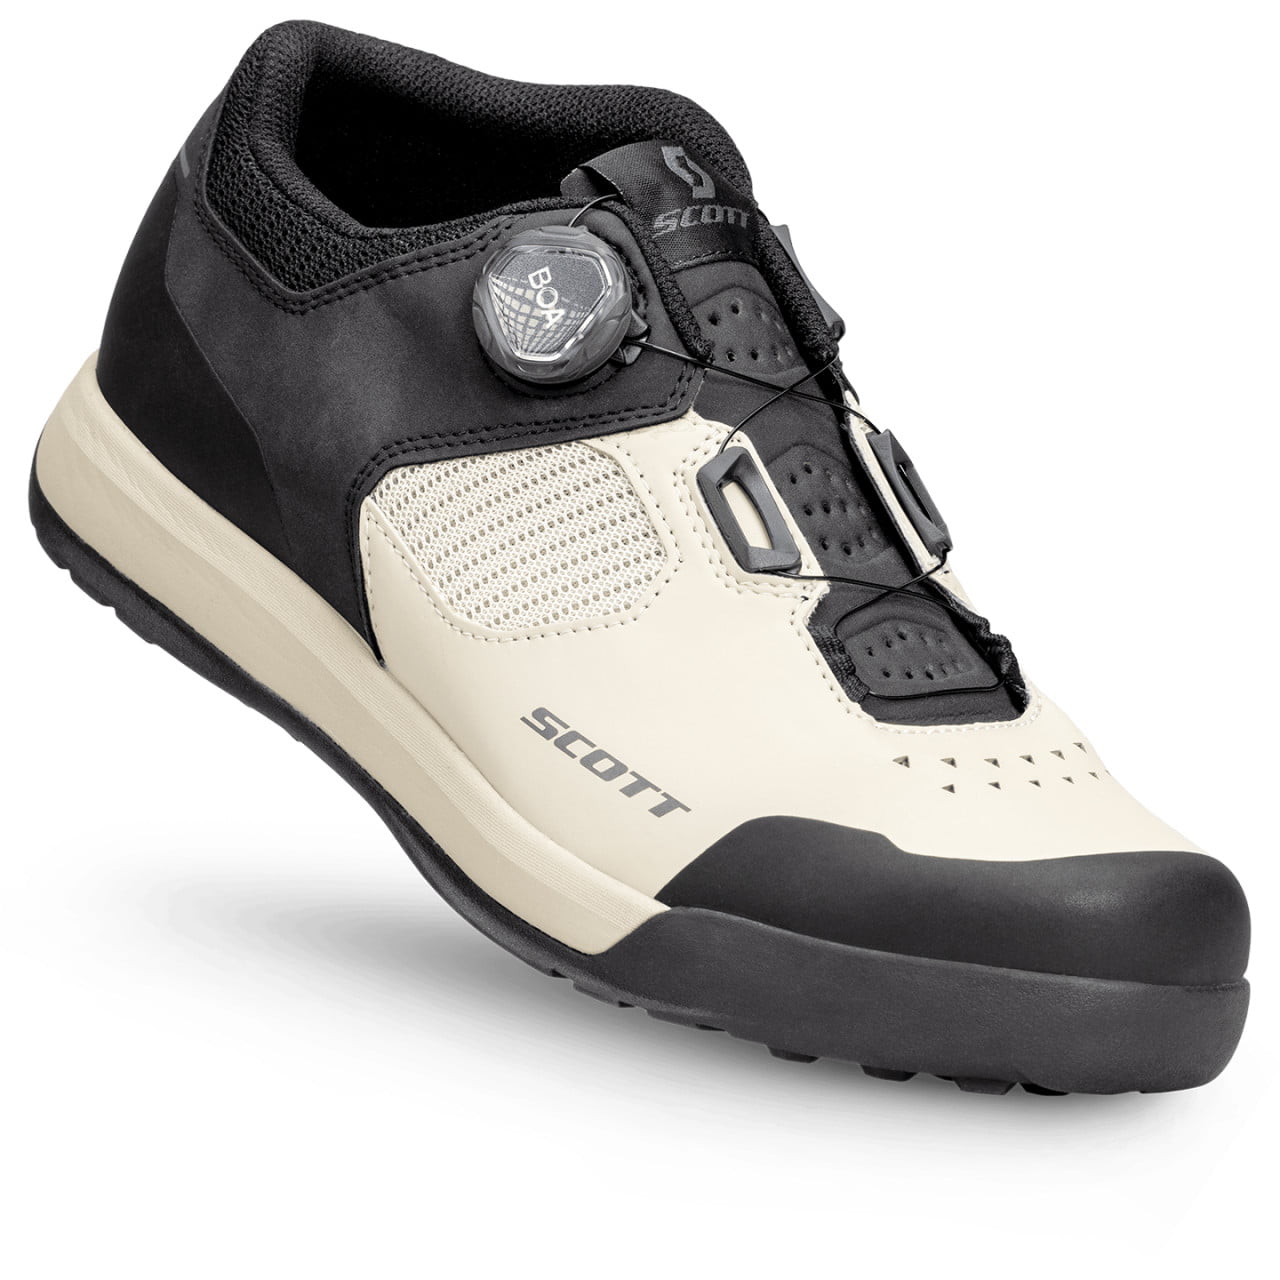 Shr-alp Evo BOA 2024 MTB Shoes